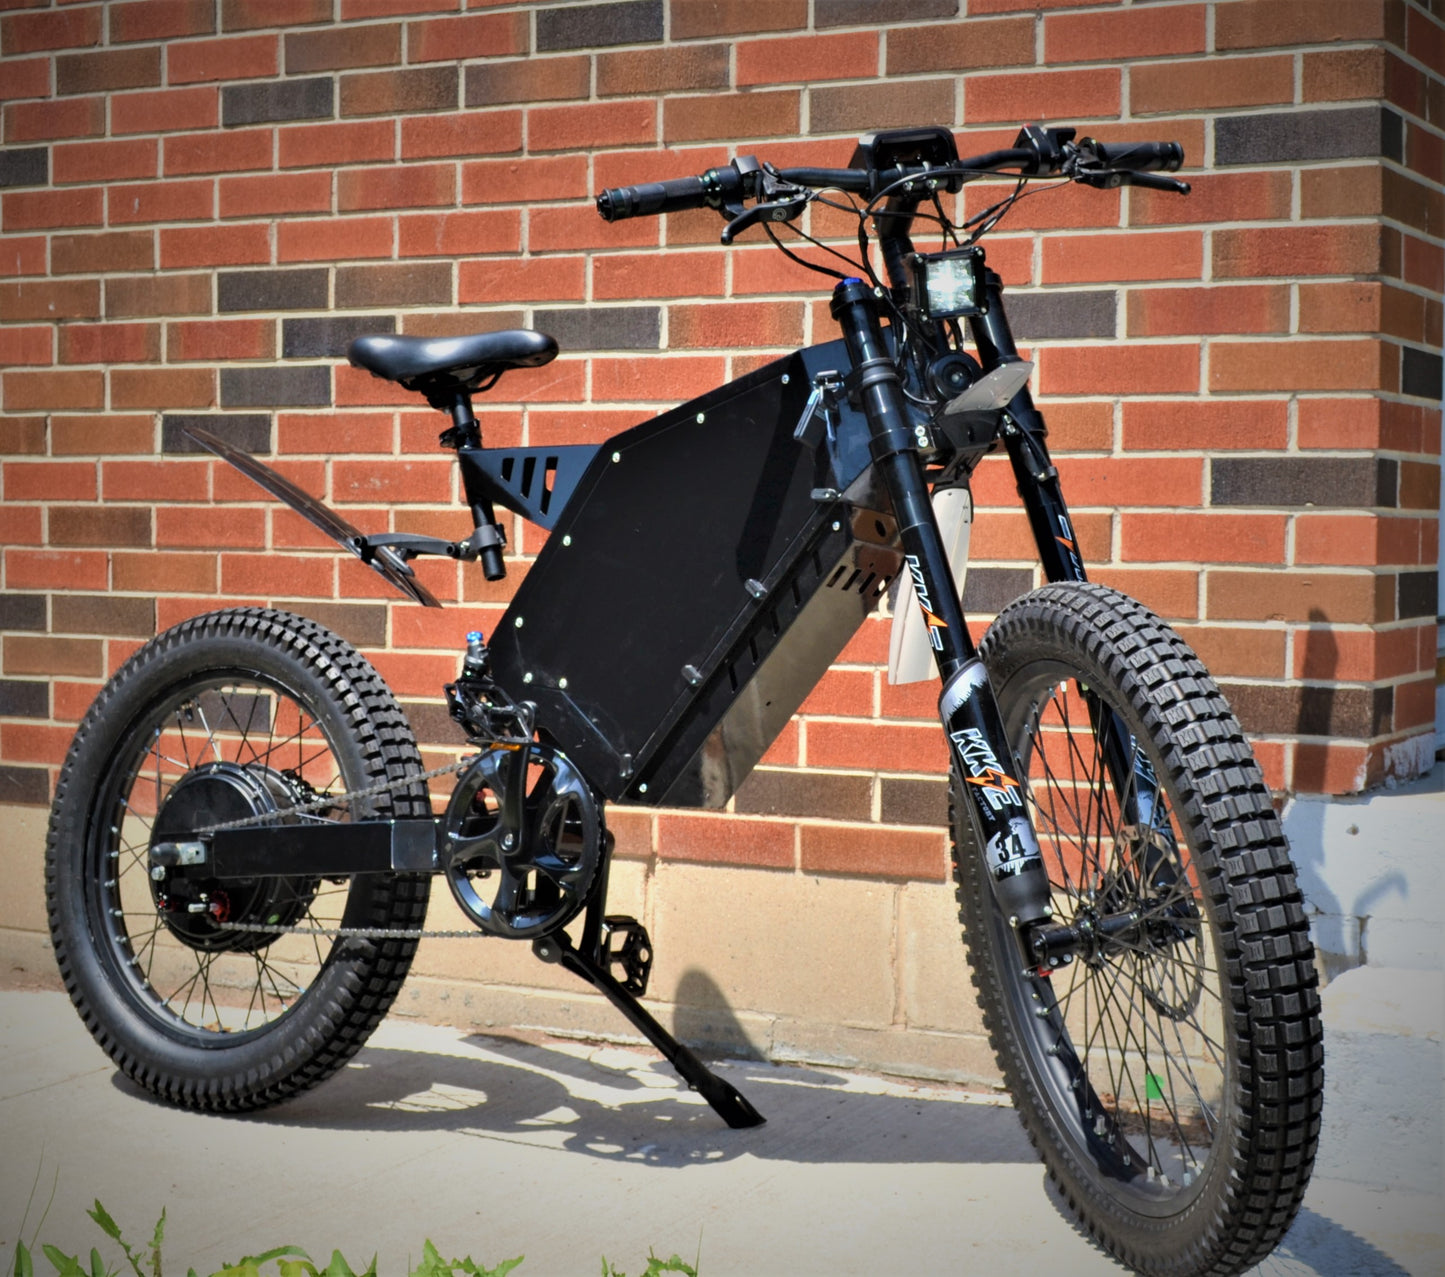 KIT COMPLET - BYO (Construisez votre propre) Stealth Enduro (Bomber) E-Bike